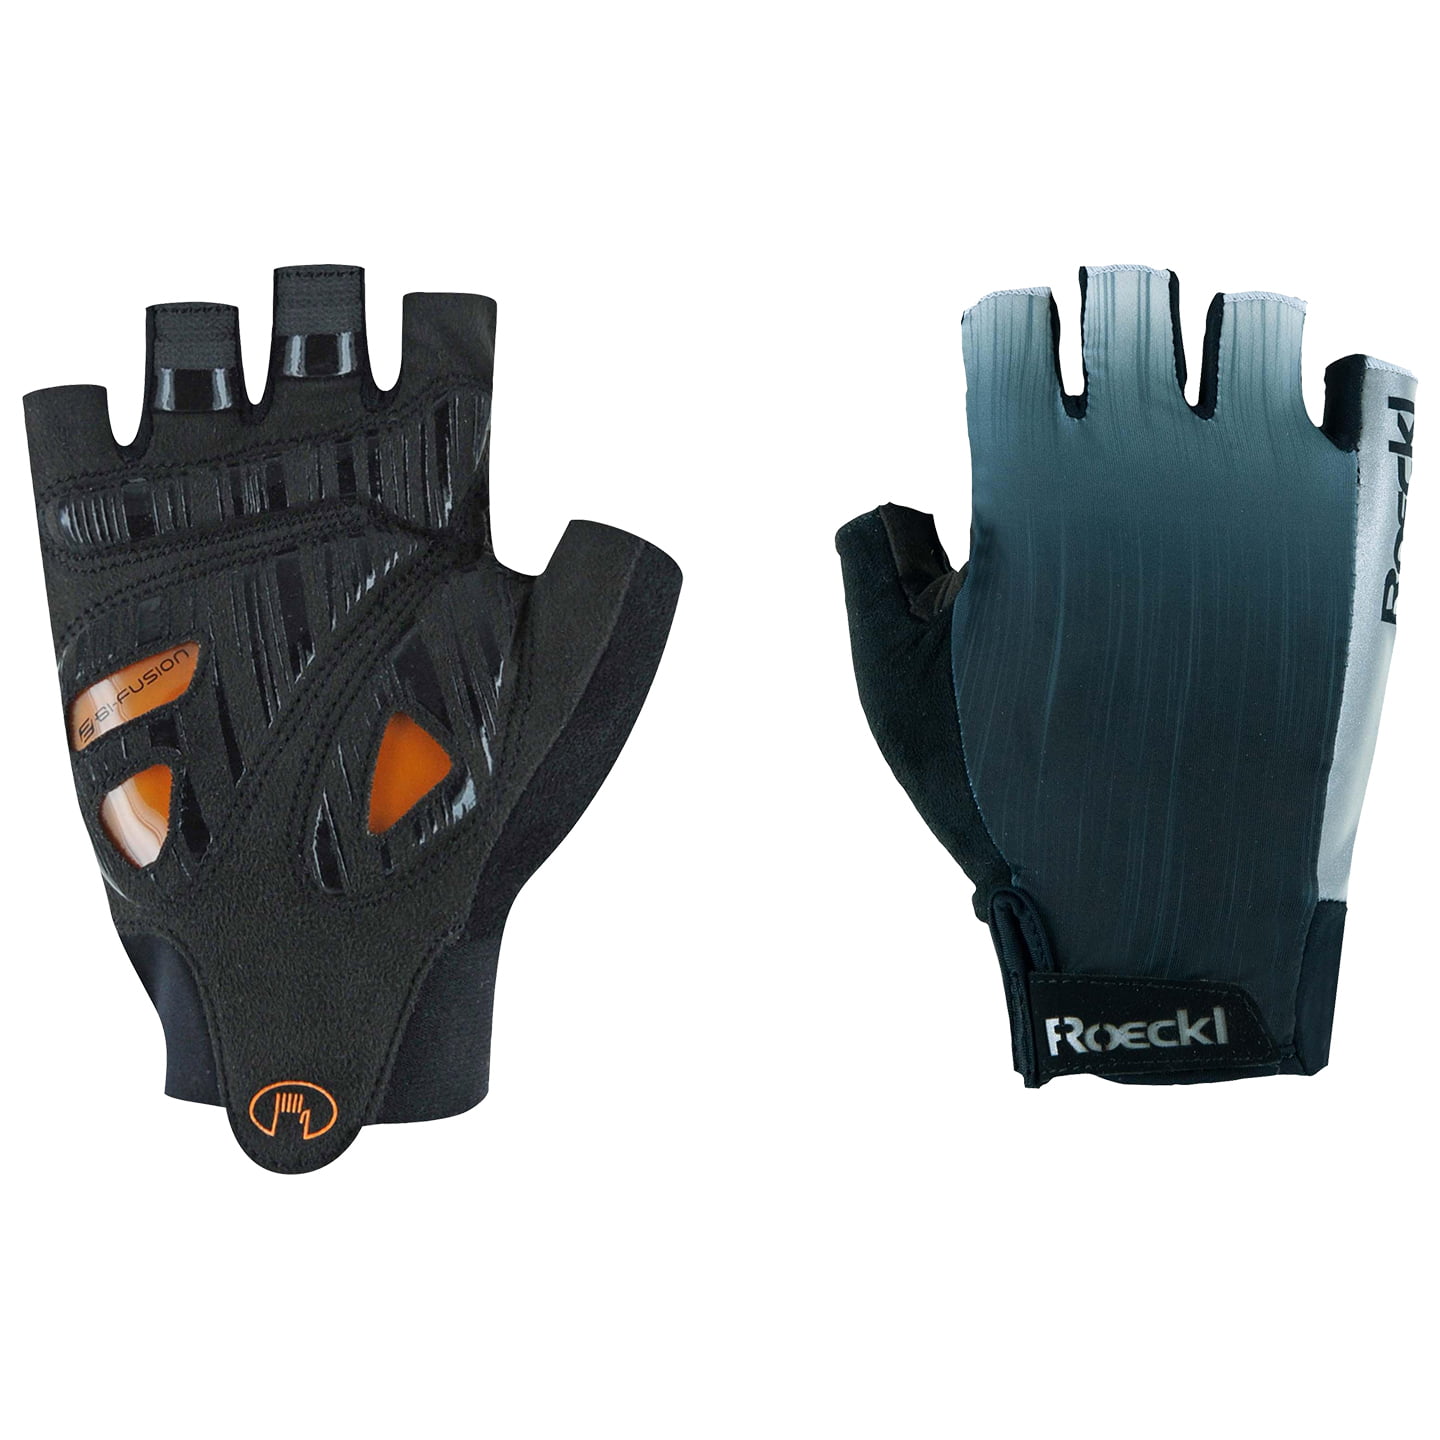 ROECKL Illasi MTB Gloves Cycling Gloves, for men, size 9, Bike gloves, Bike wear